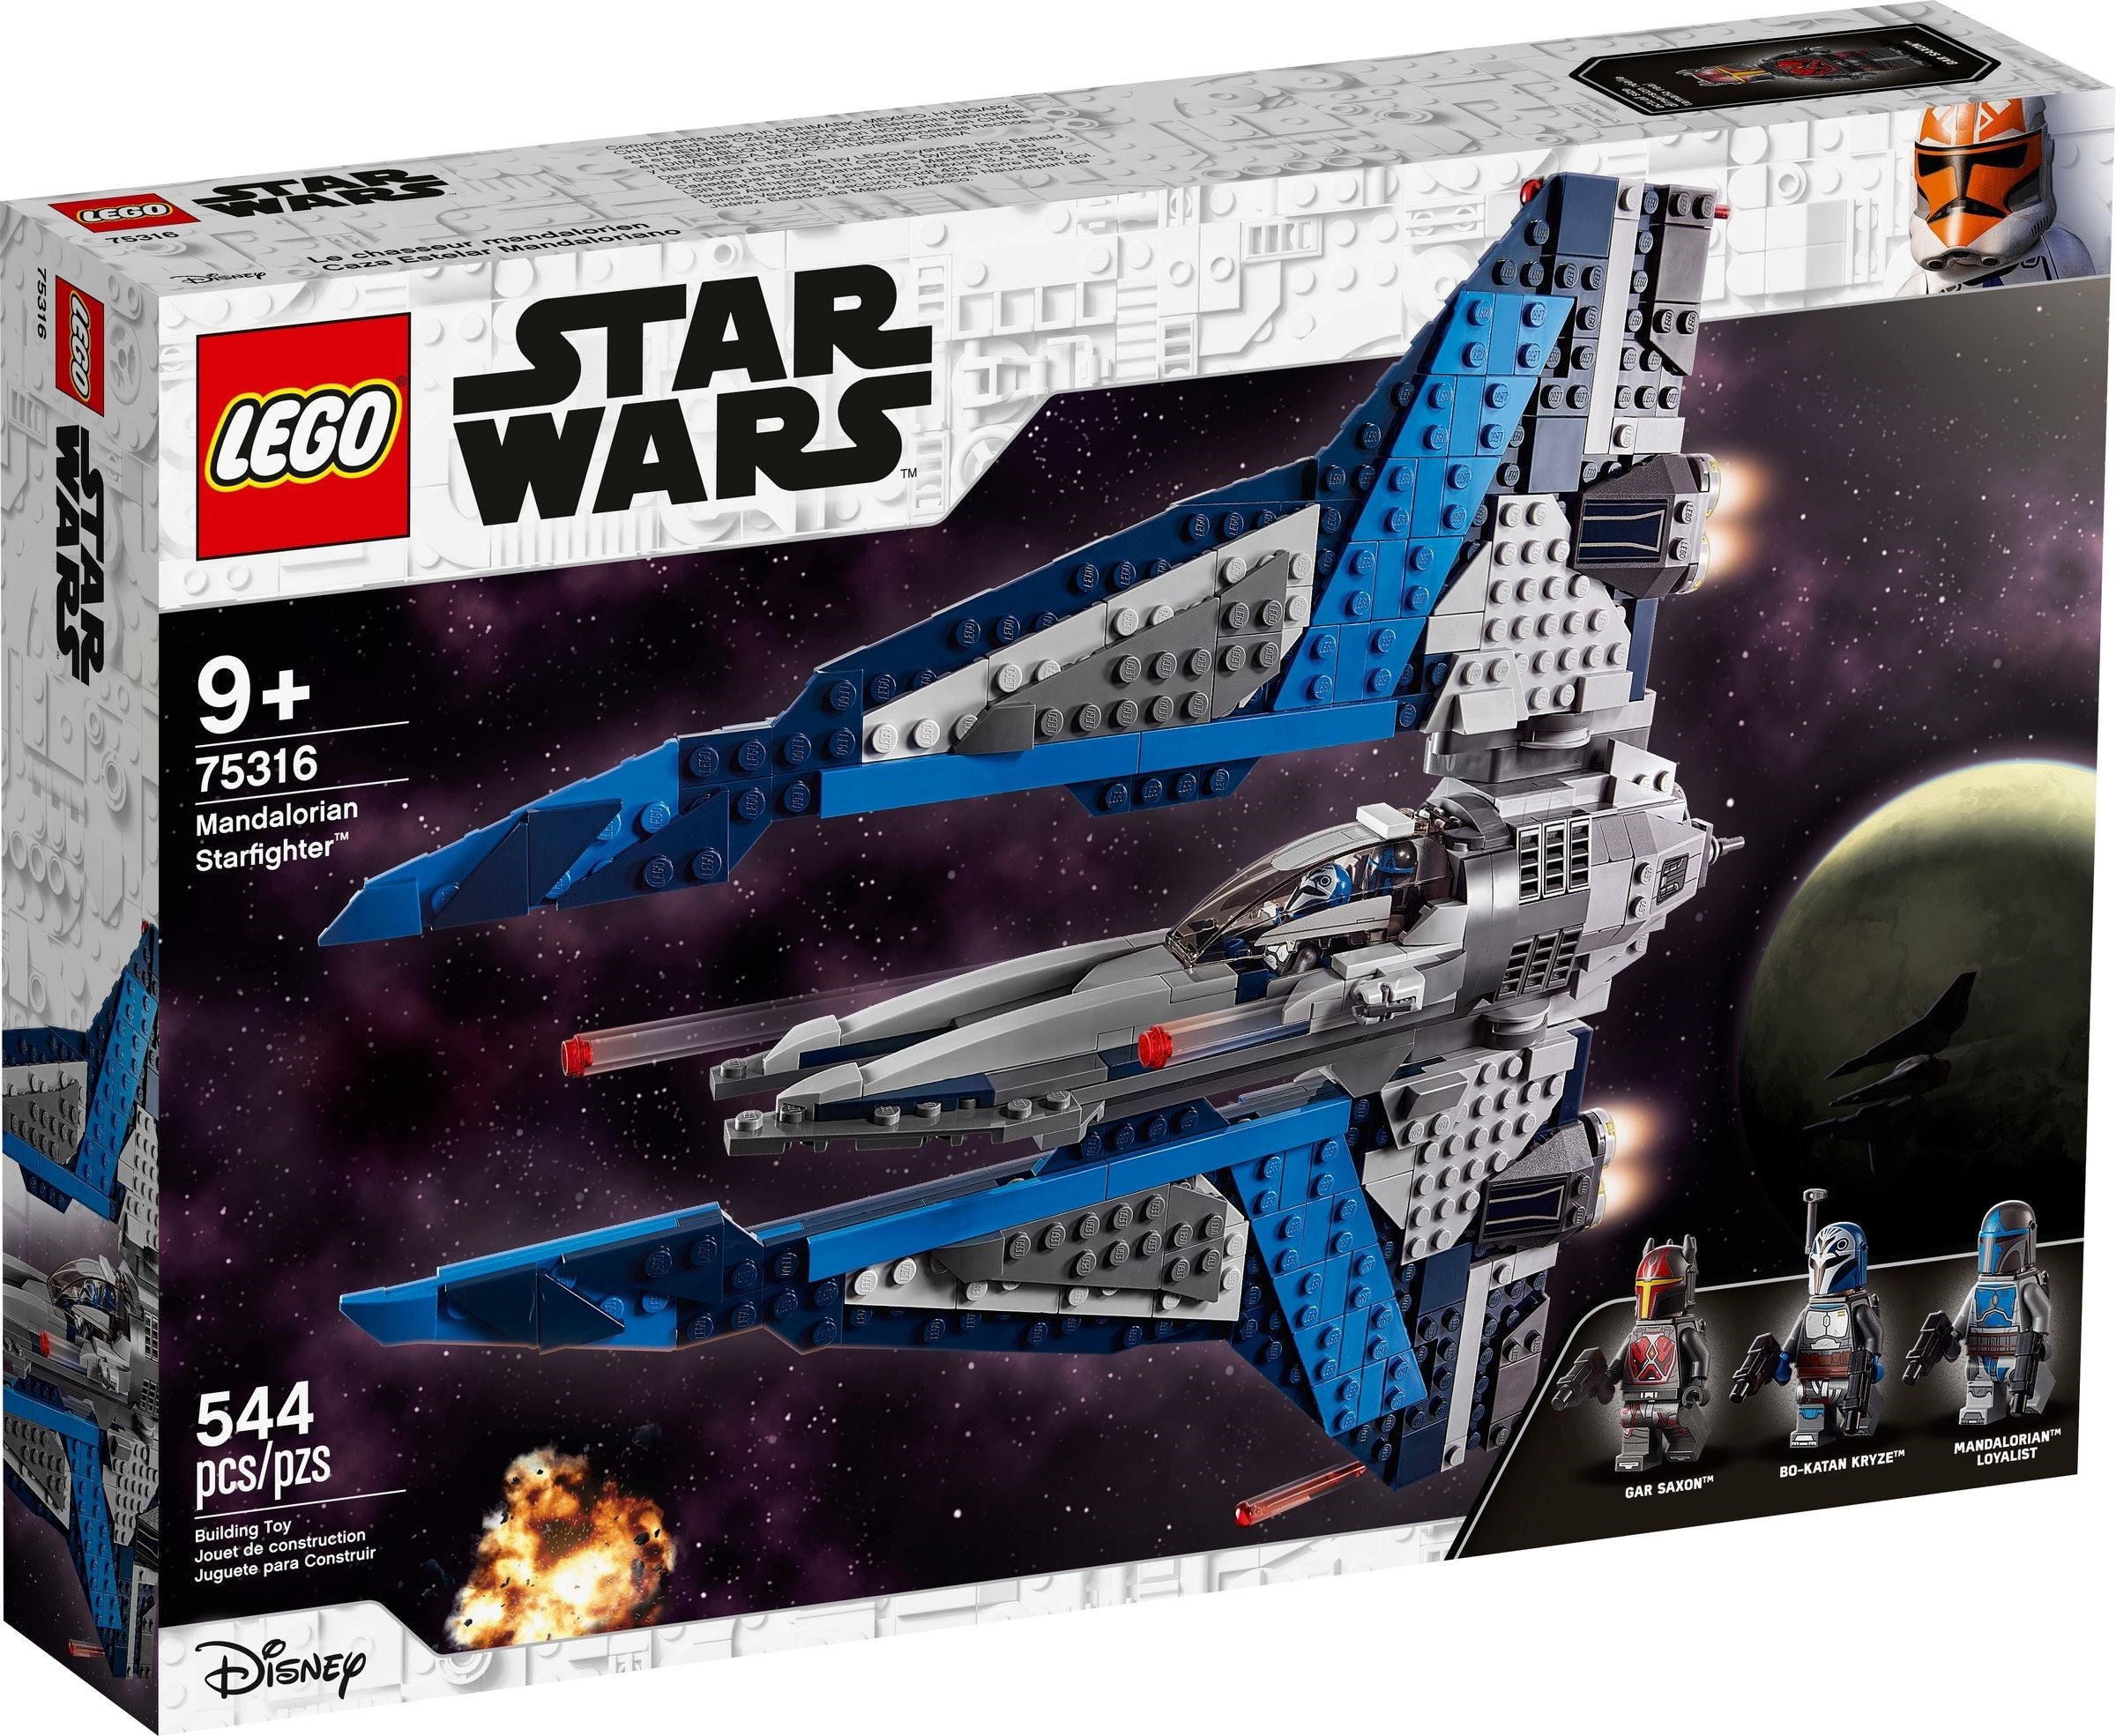 Lego Star Wars 75316 - Mandalorian Starfighter